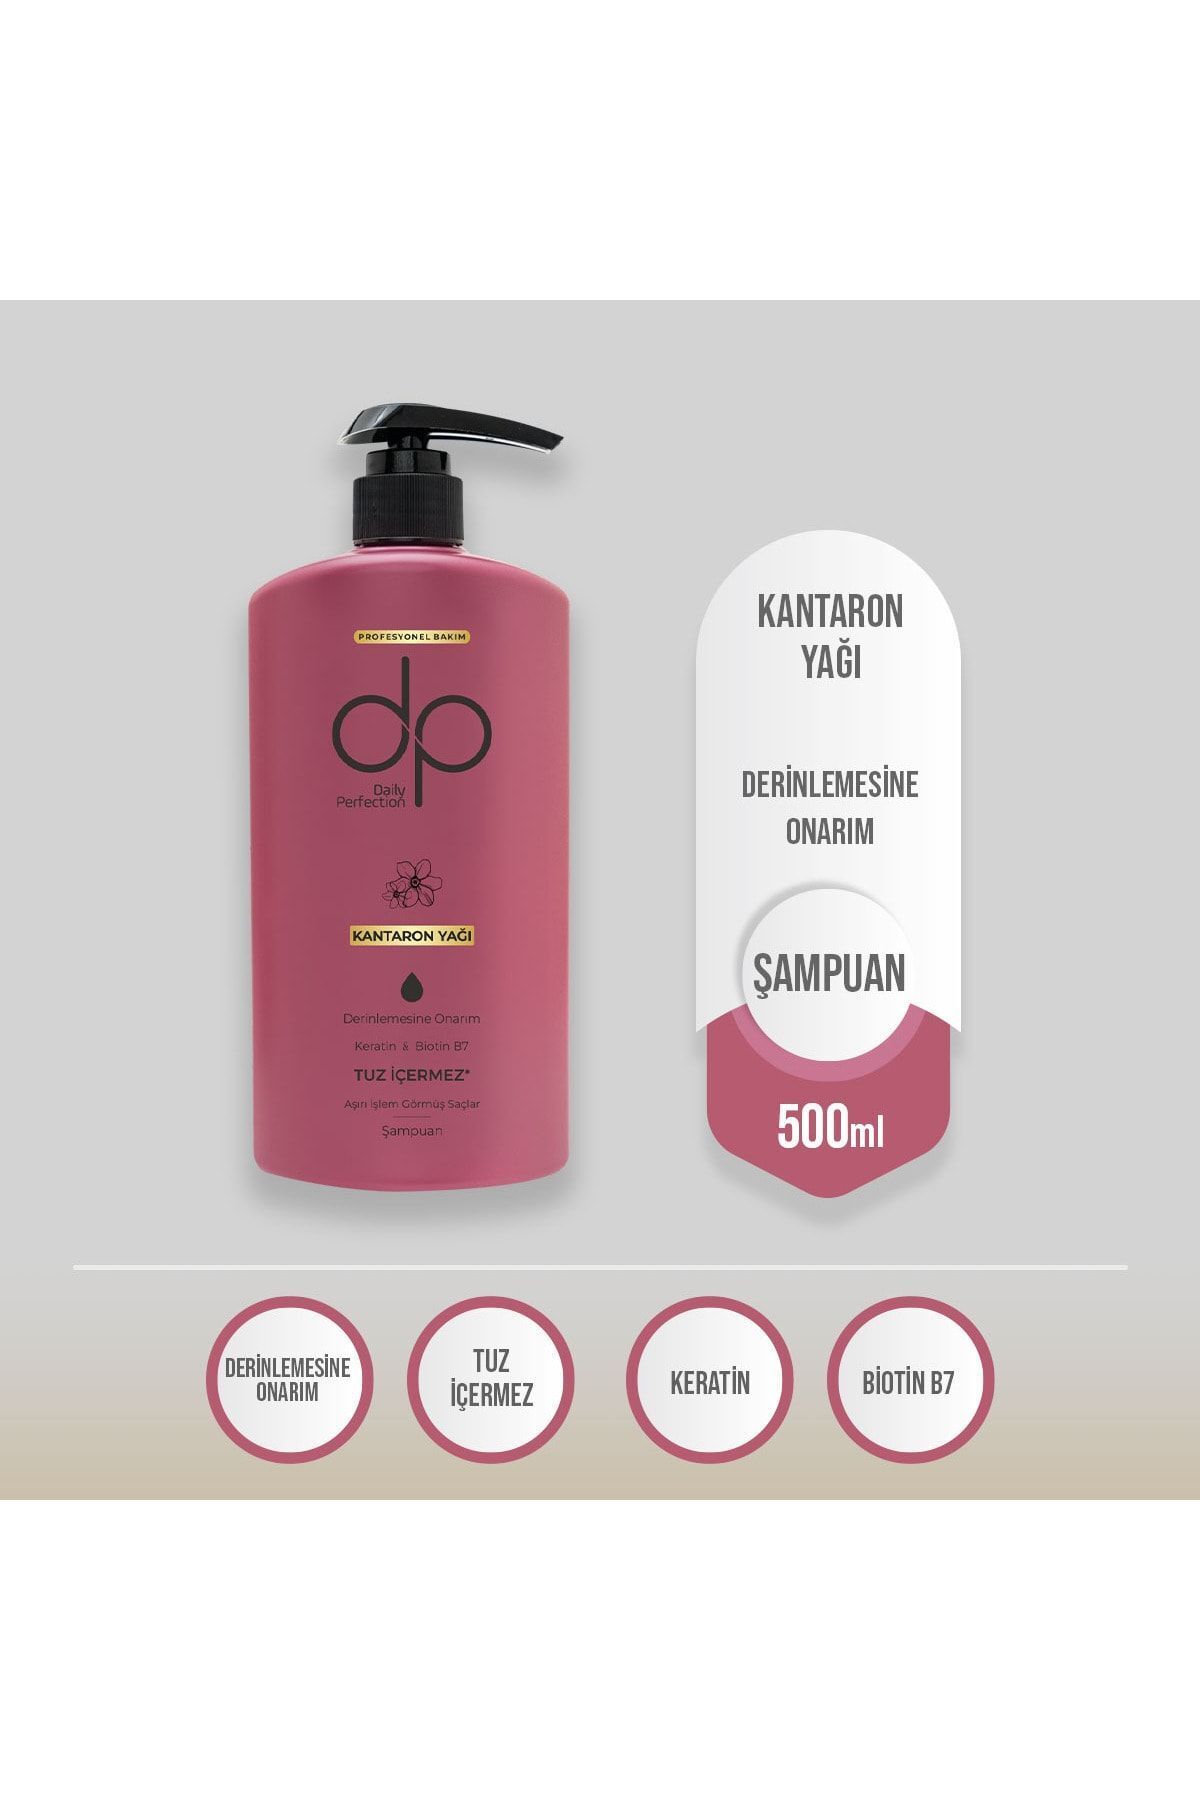 DP Daily Perfection Kantaron Yağı Tuzsuz Şampuan 500 Ml